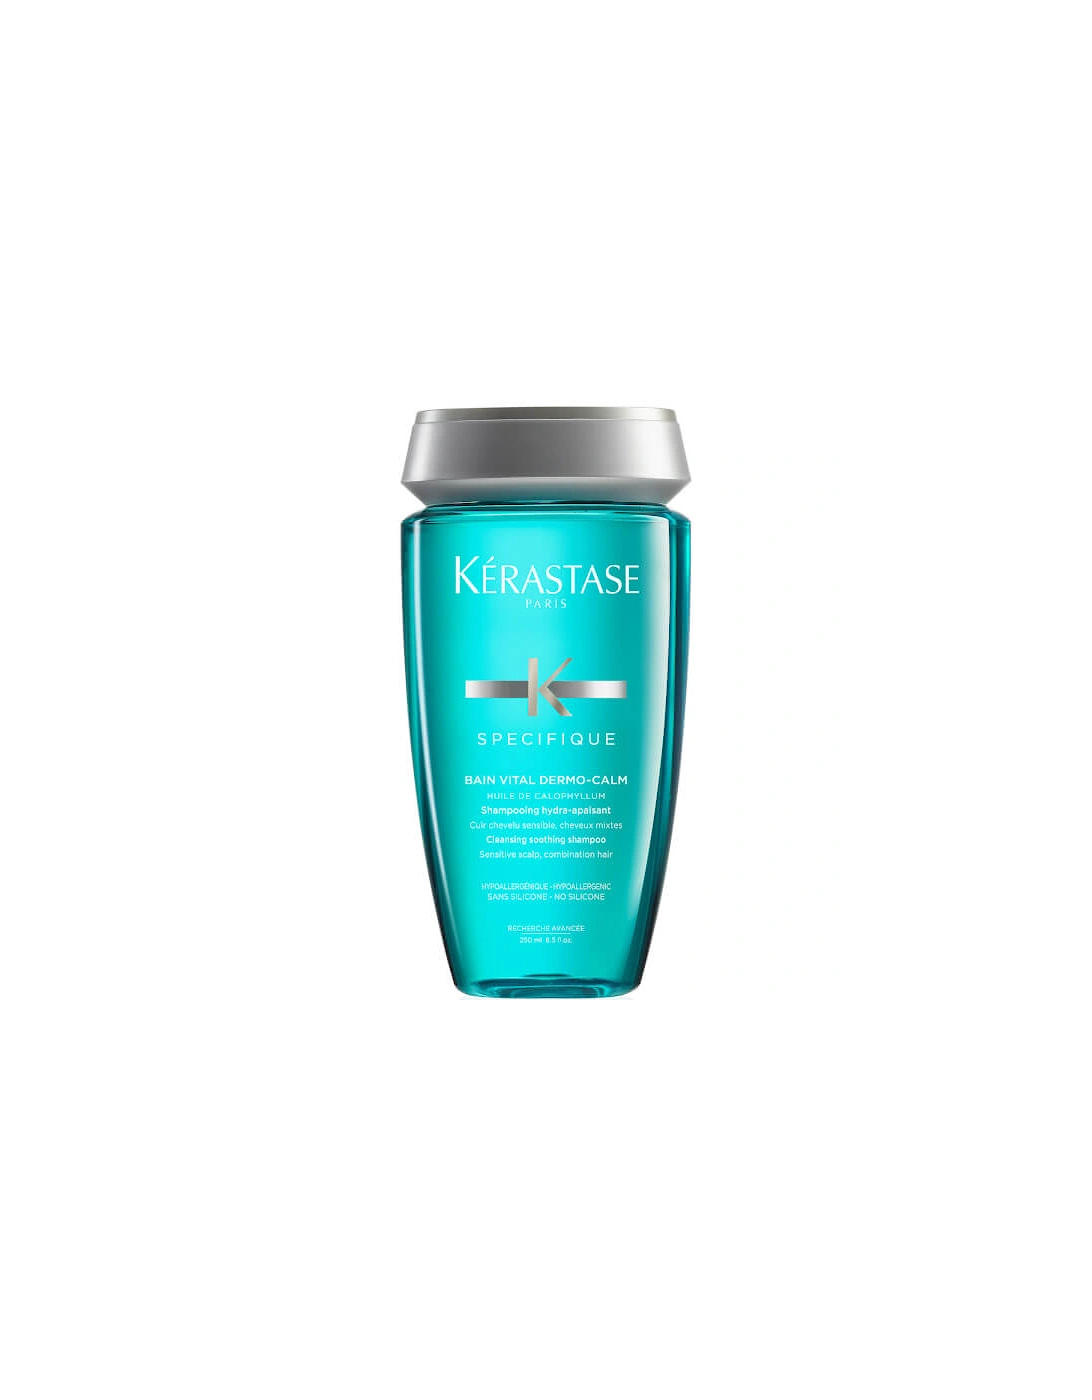 Kérastase Specifique Dermo-Calm Bain Vital Shampoo 250ml - Kerastase, 2 of 1